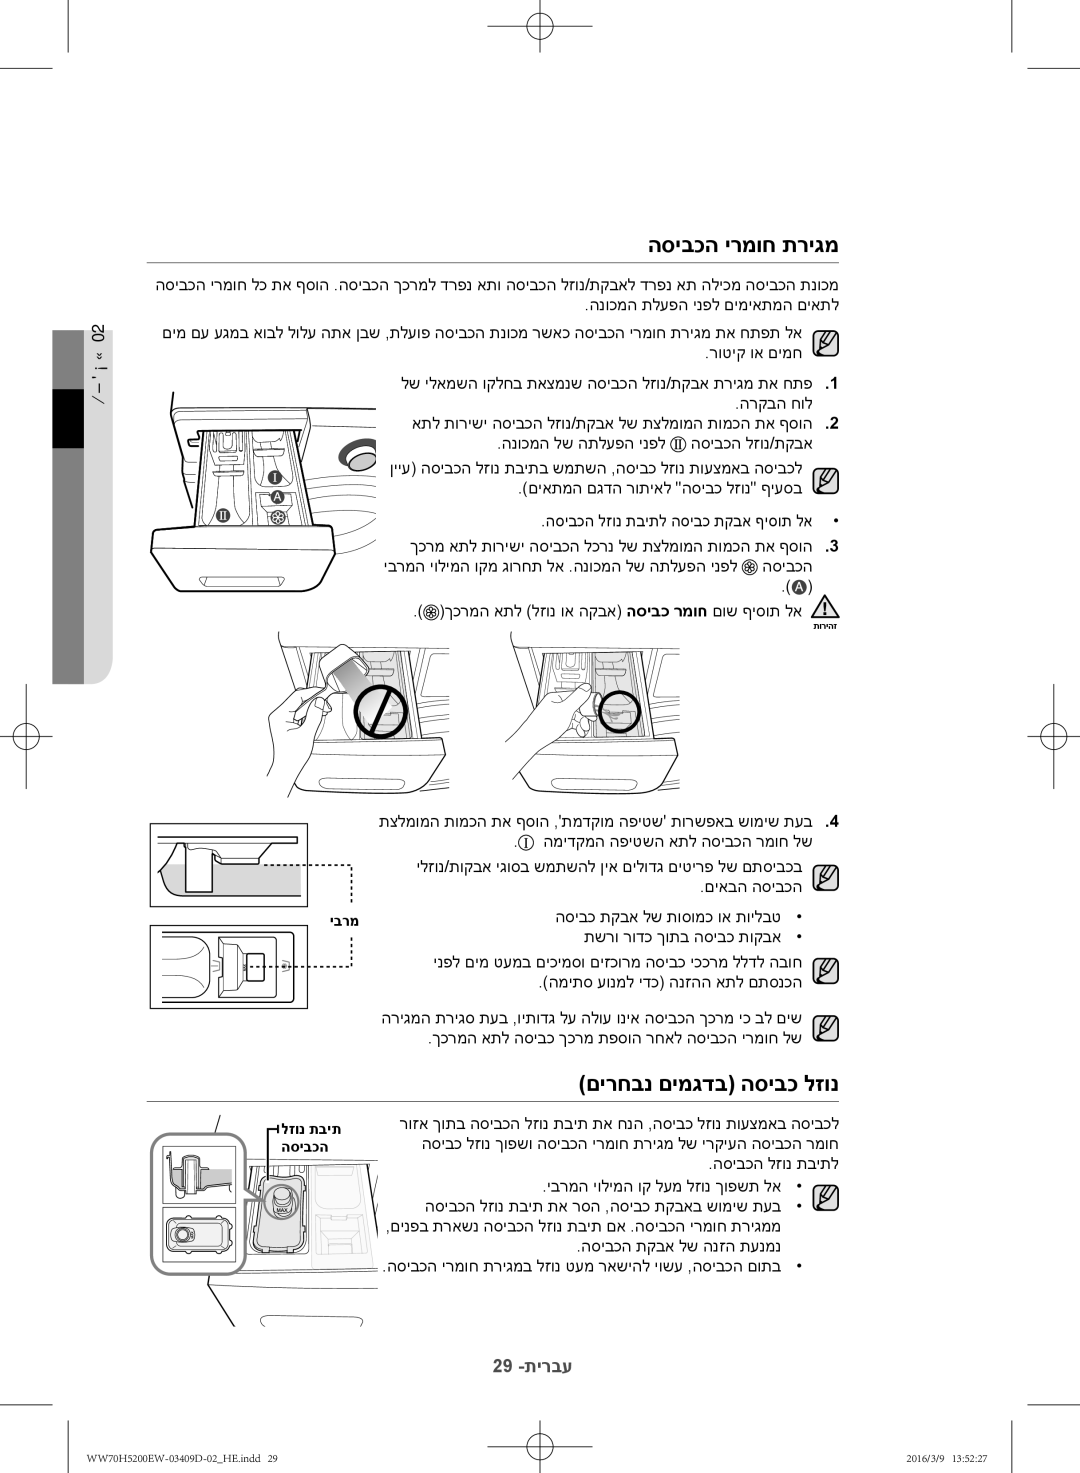 Samsung WW70H5200EW/KJ manual הסיבכה ירמוח תריגמ, םירחבנ םימגדב הסיבכ לזונ 